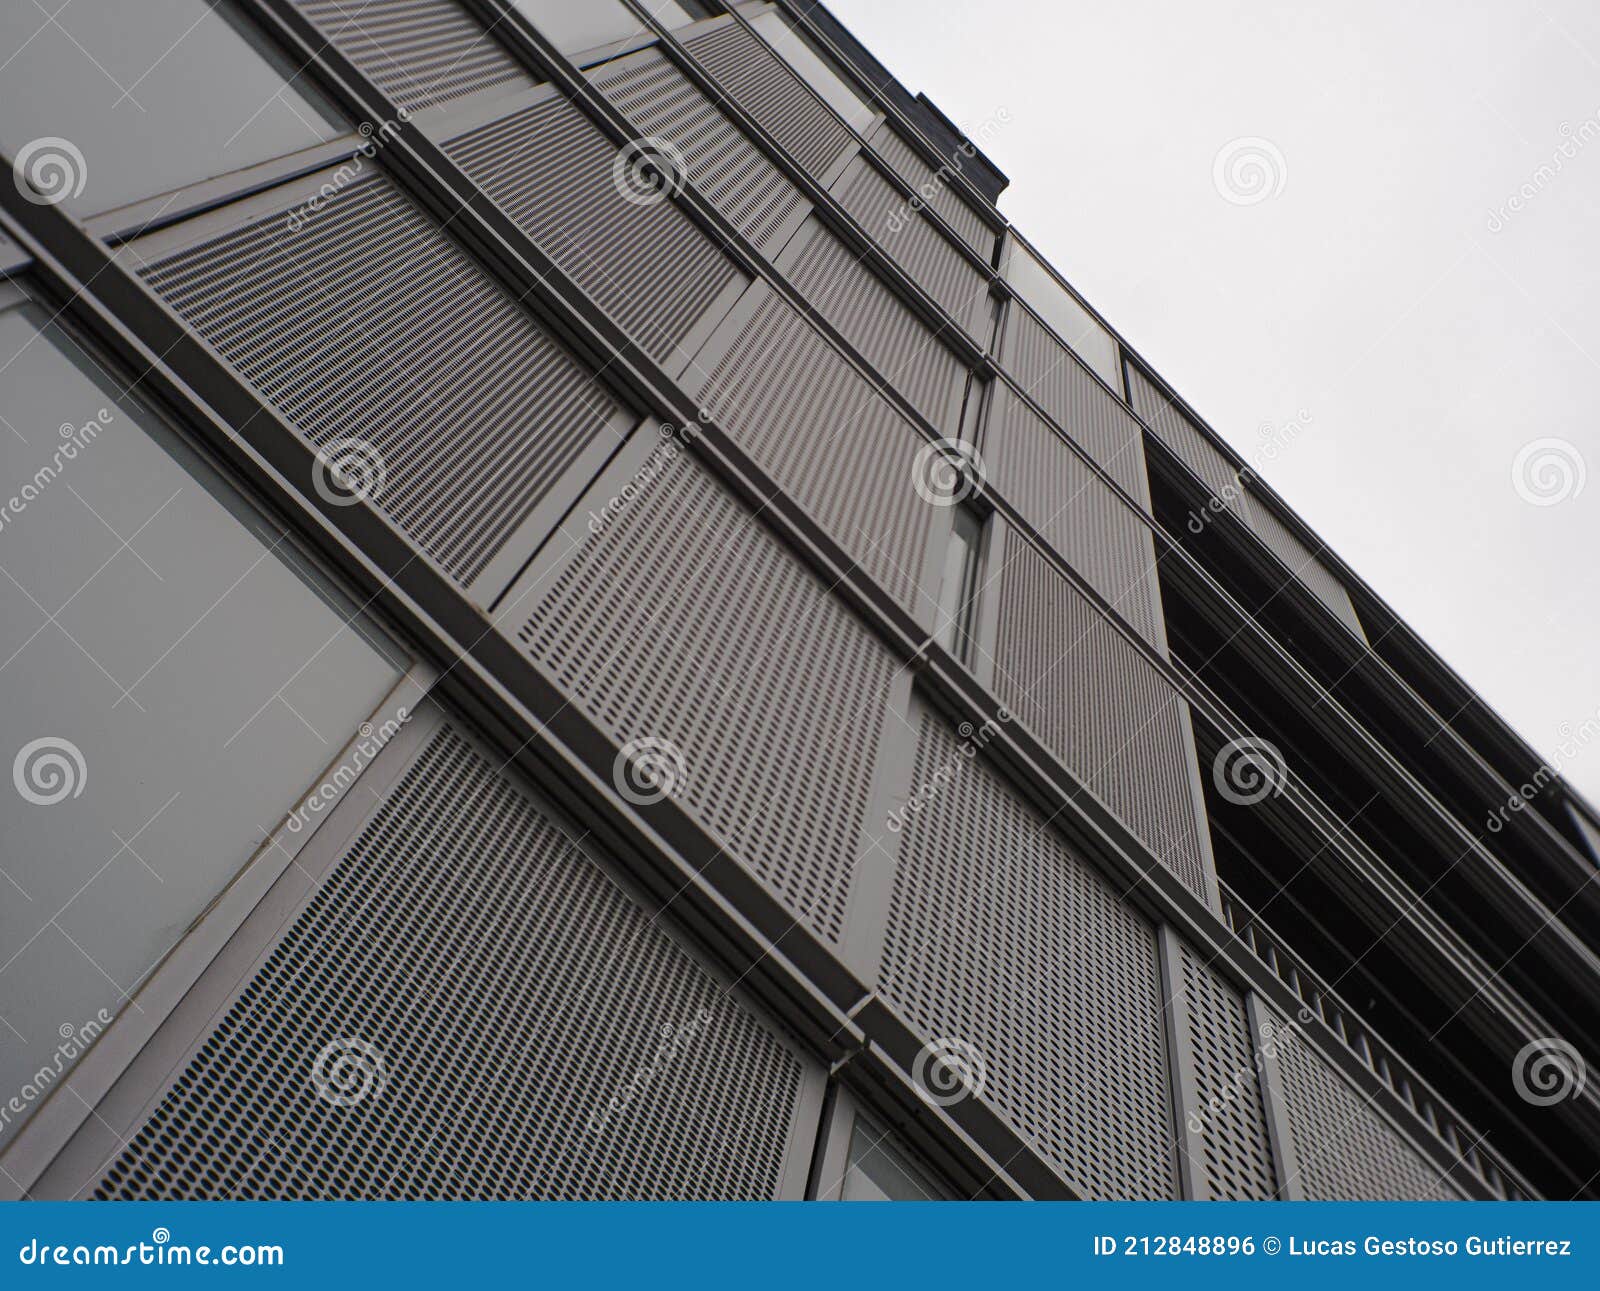 gray metal facade perspective